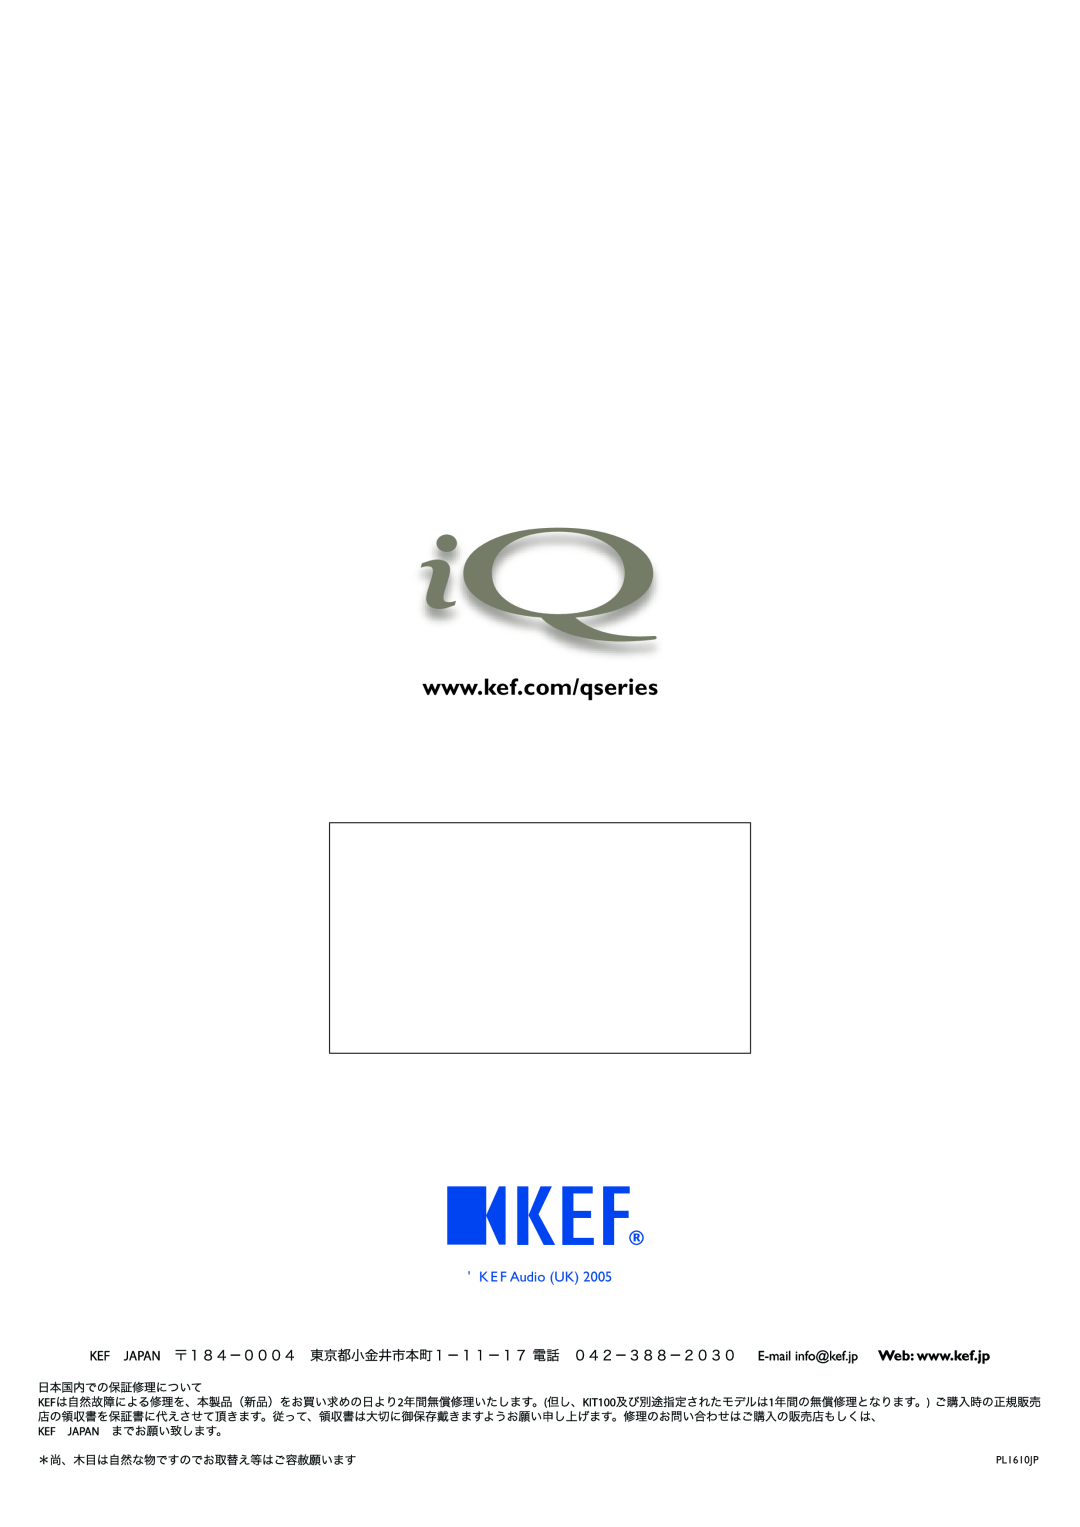 KEF Audio JP IQ manual K E F Audio UK, PL1610JP 